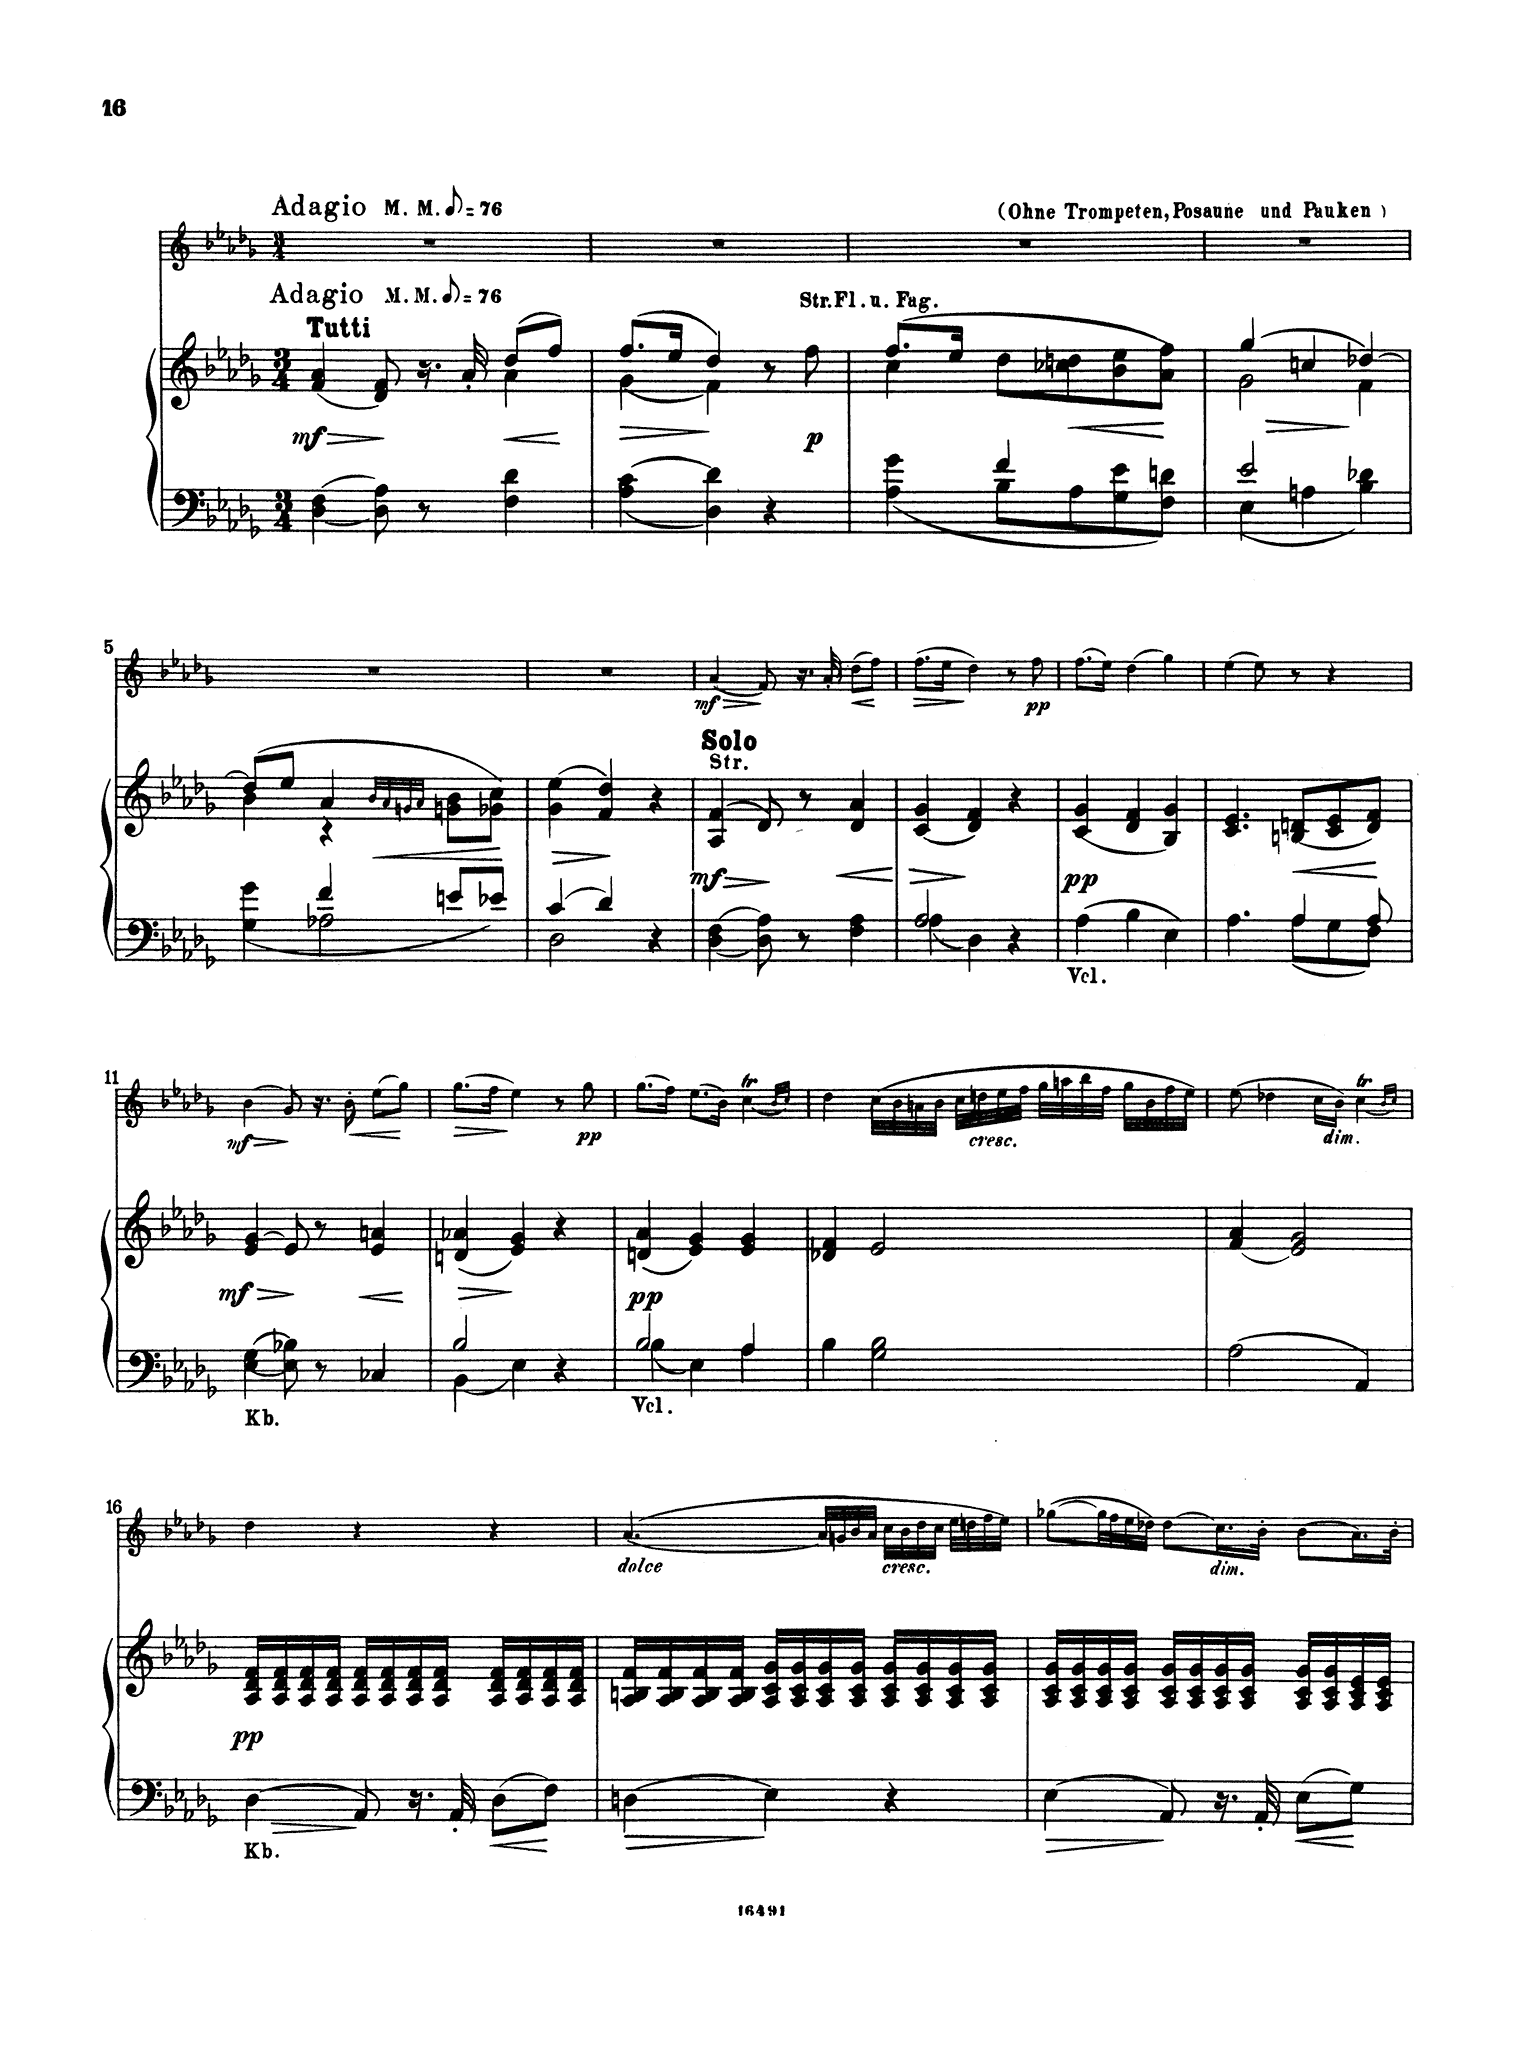 Clarinet Concerto No. 3 in F Minor, WoO 19 - Movement 2